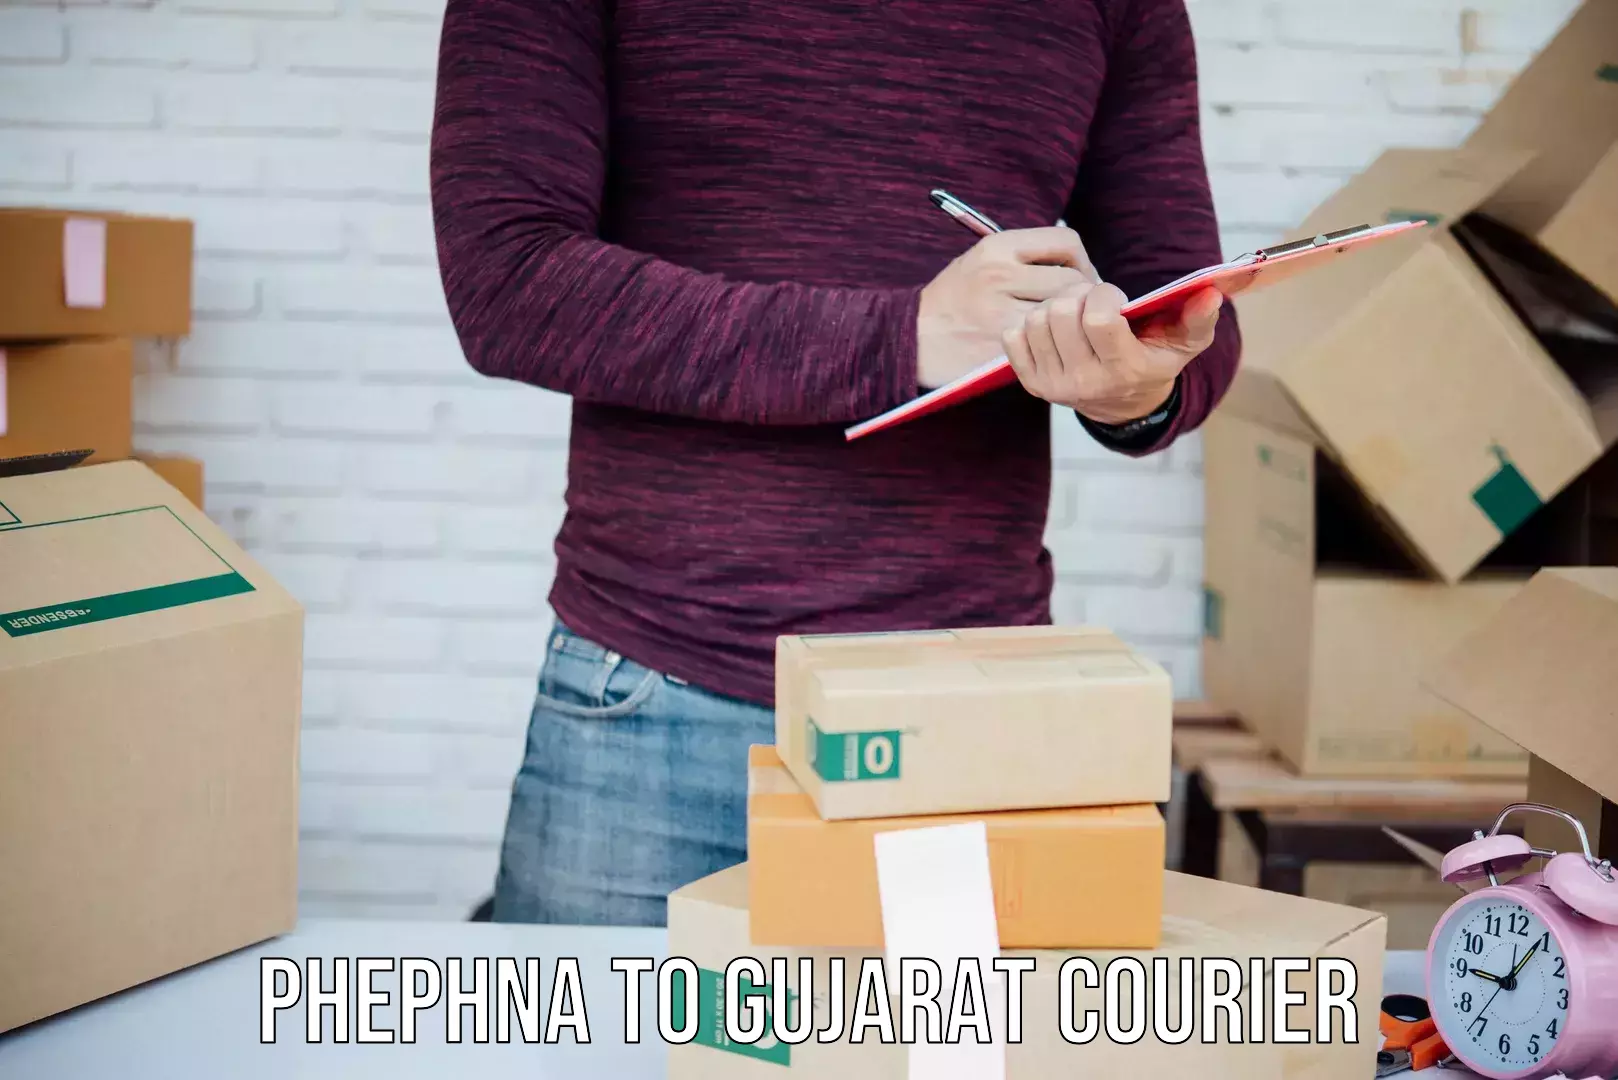 Flexible shipping options Phephna to Gujarat